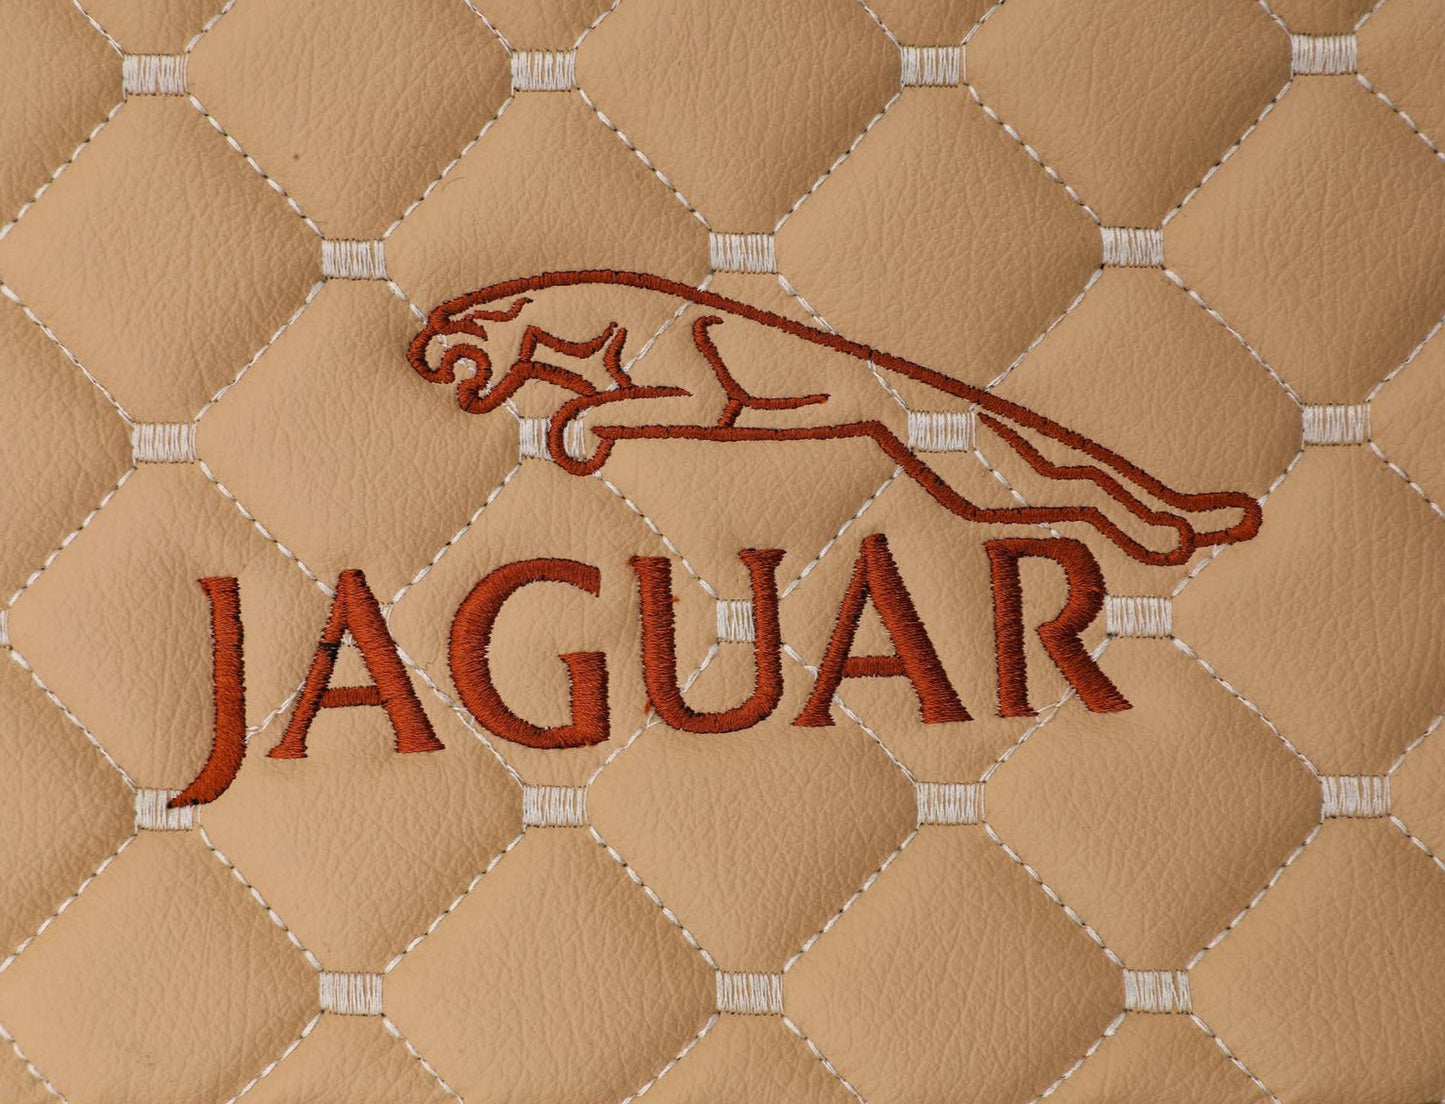 Jaguar S Type All Model Special Design Leather Custom Car Mat